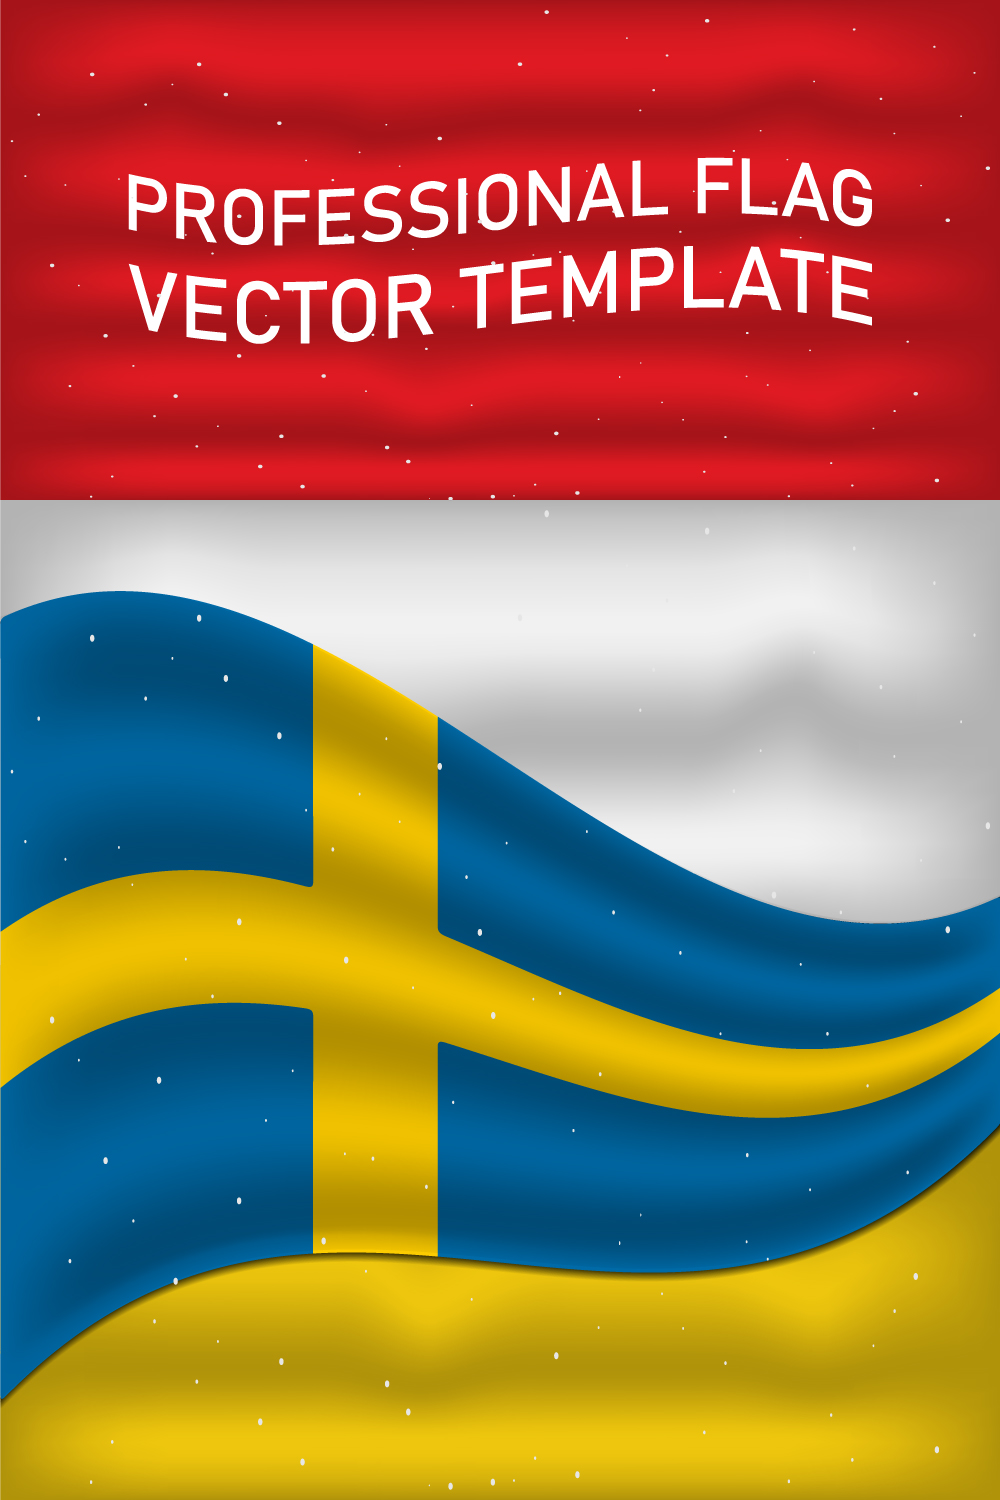 Wonderful image of the flag of Sweden.